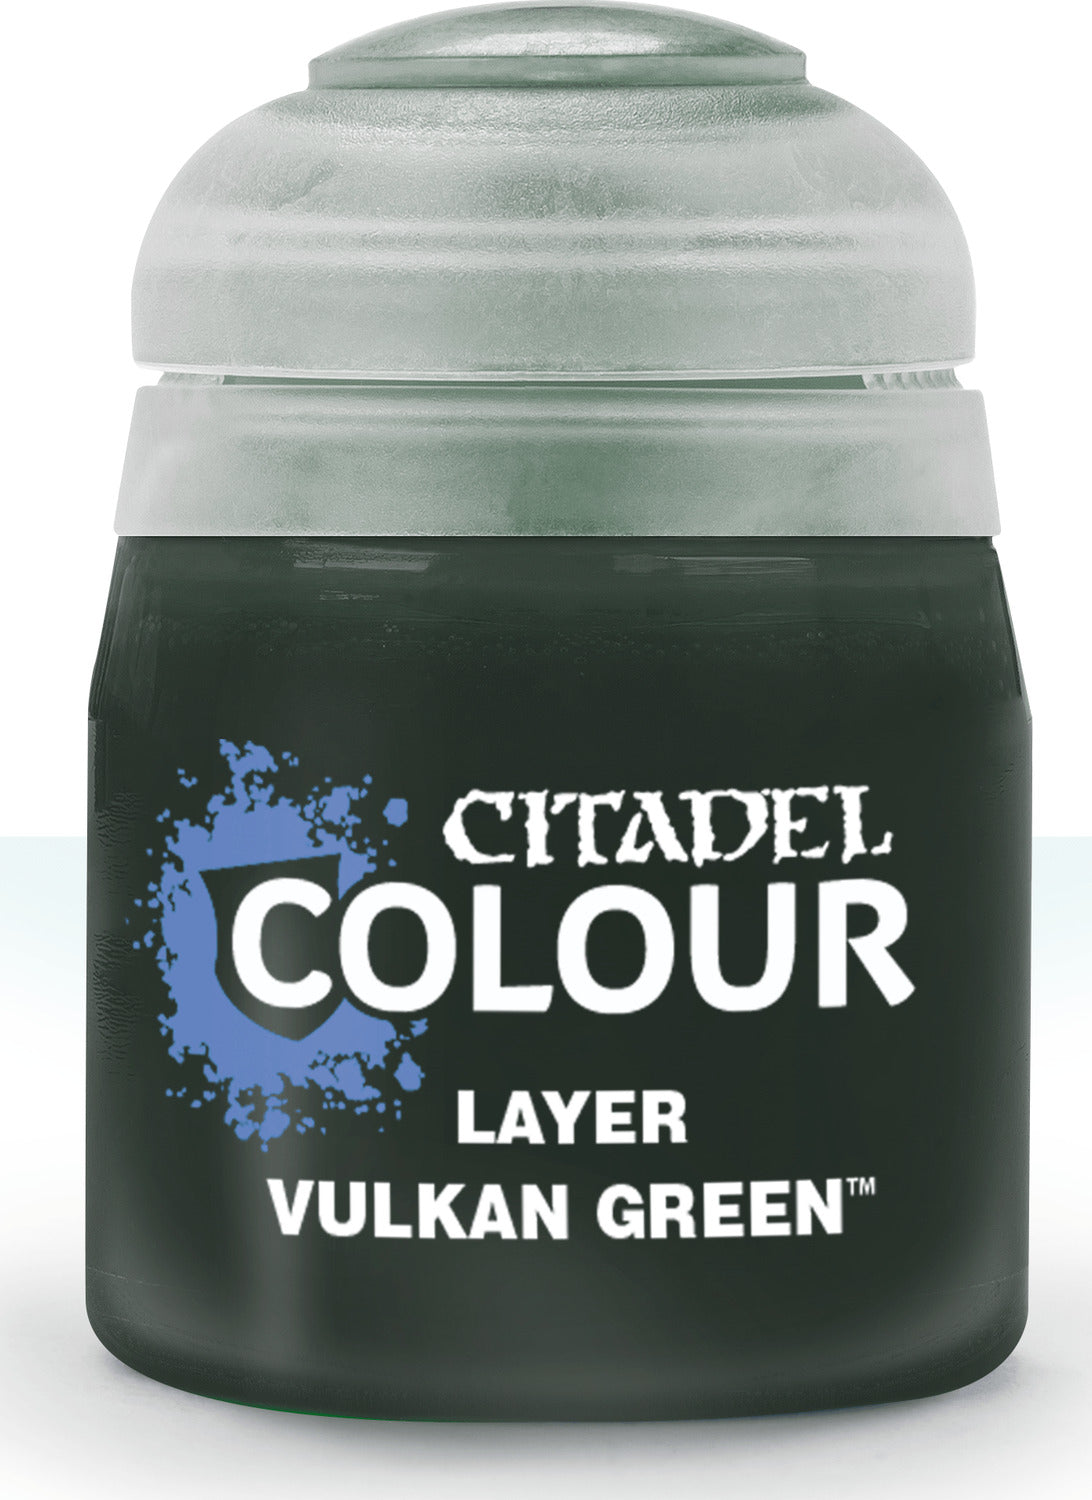 Layer: VULKAN GREEN (12ML)